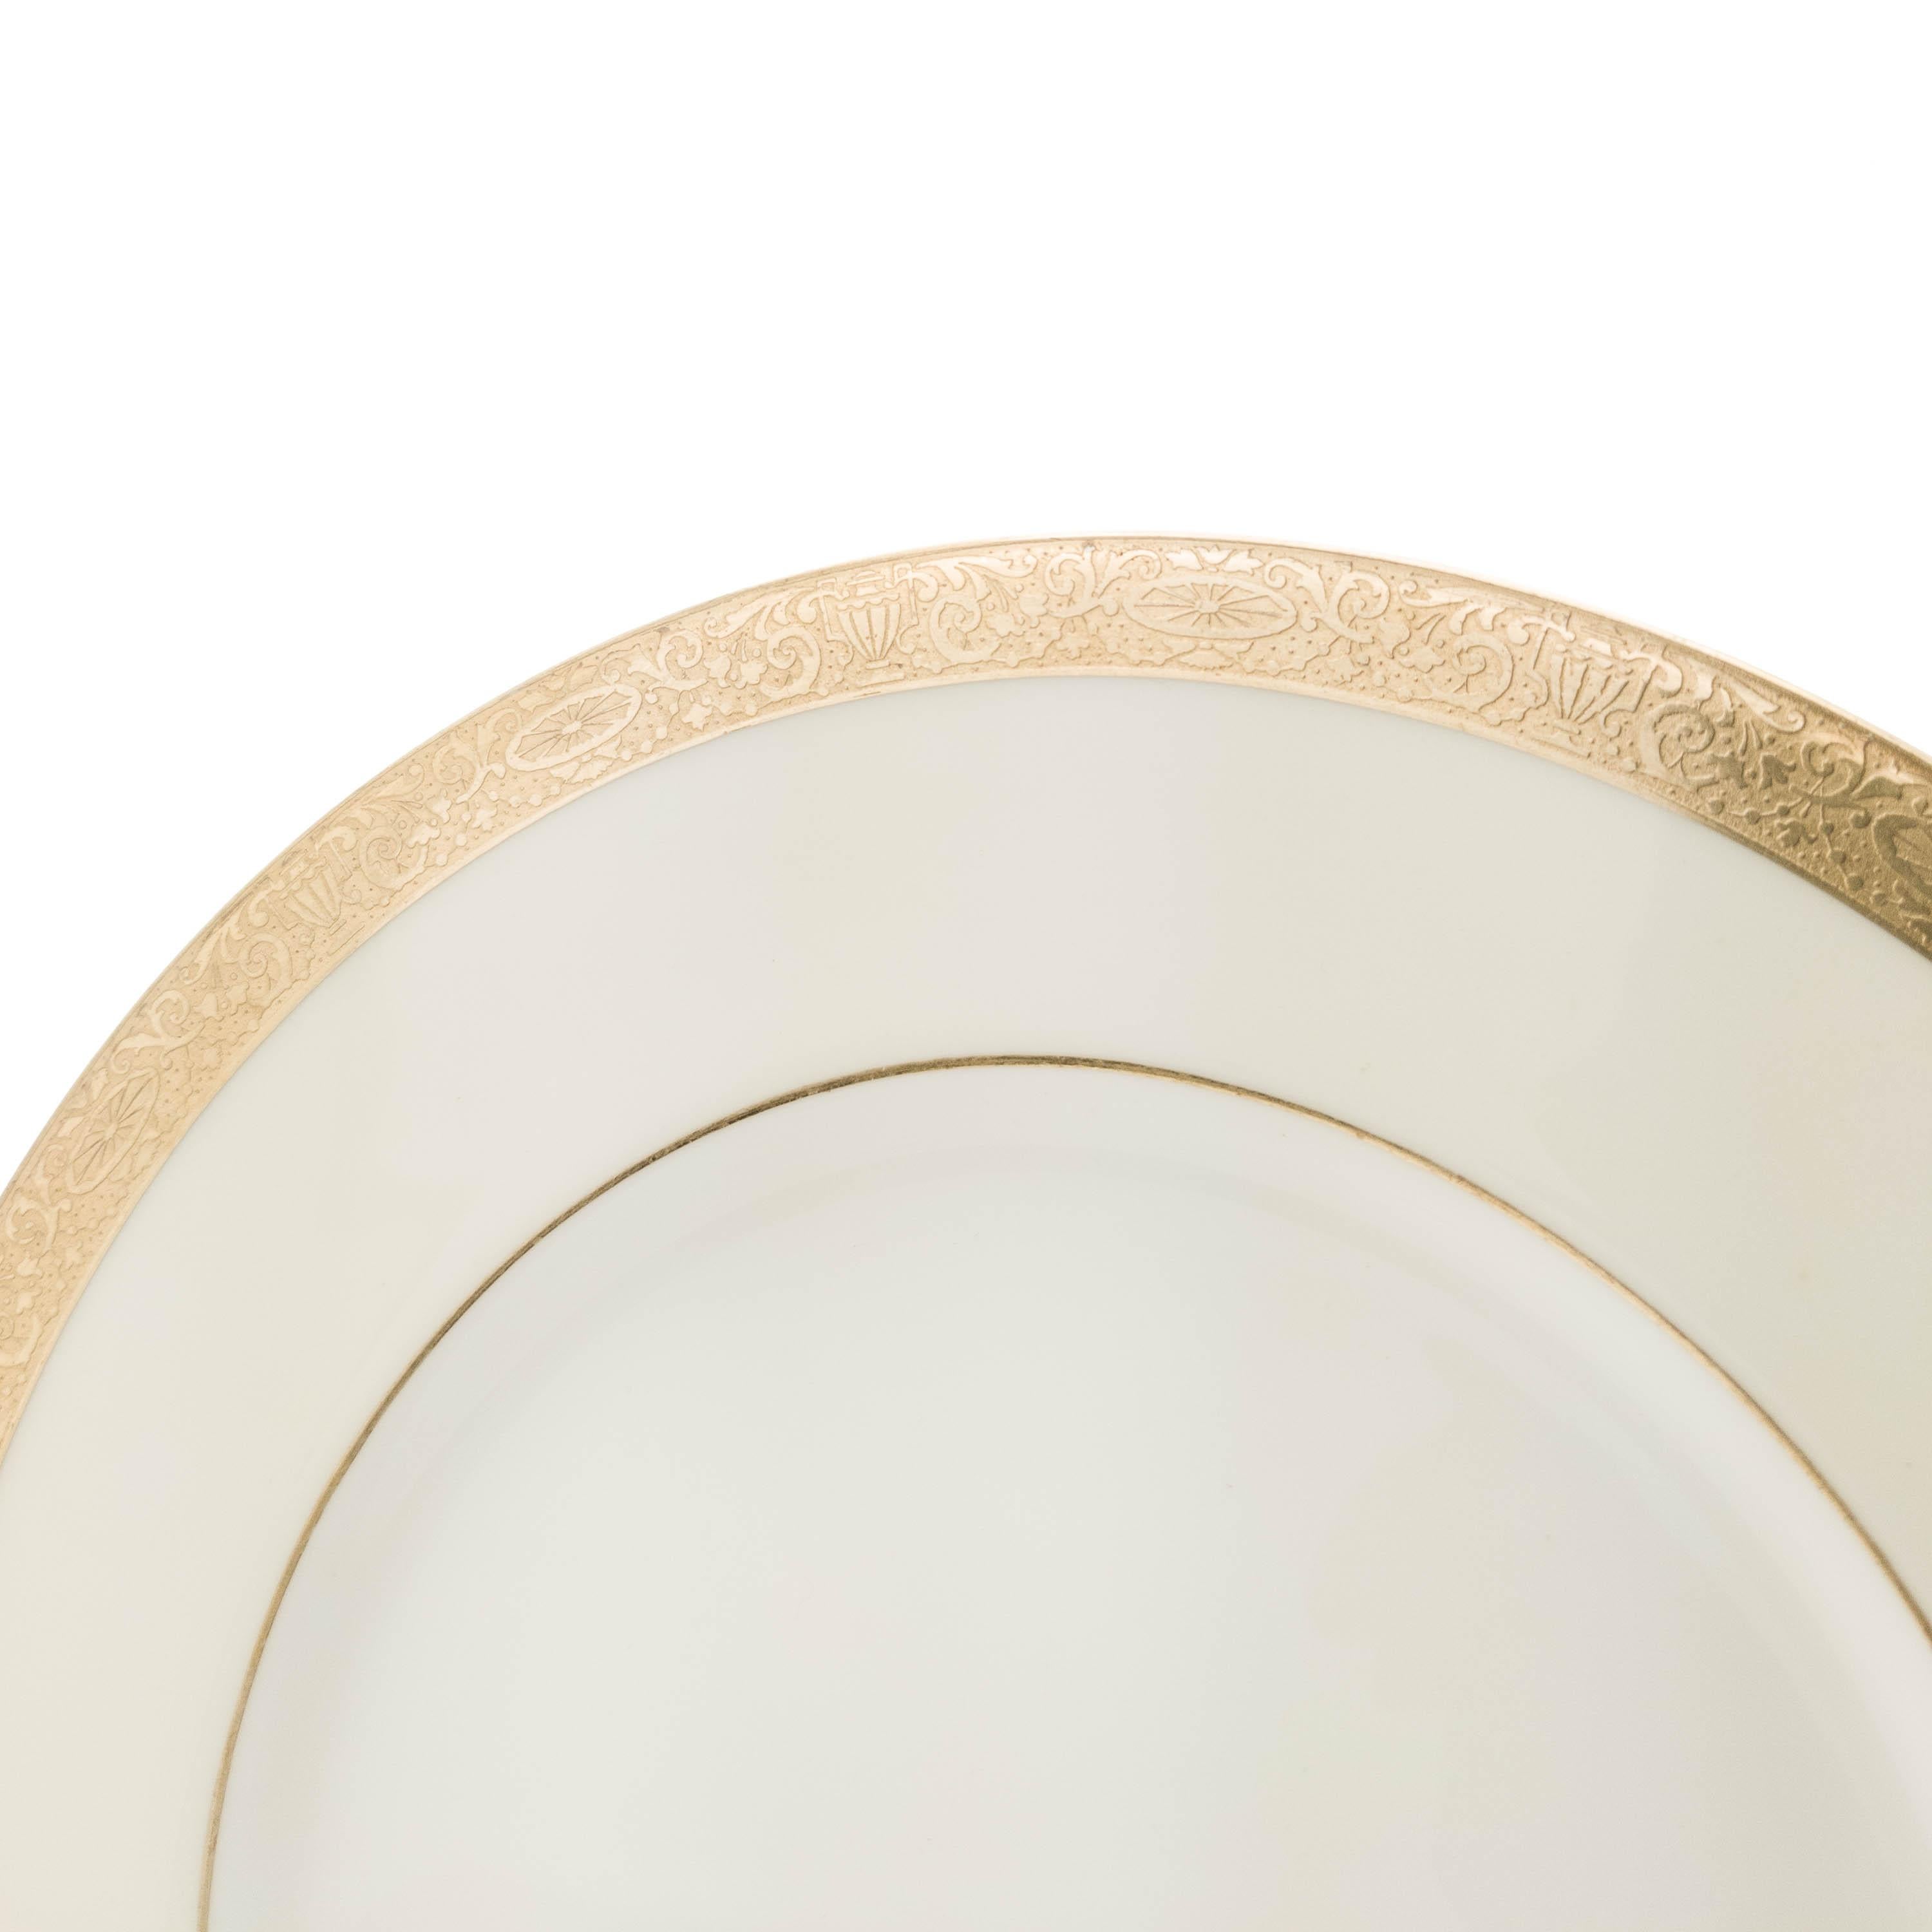 British 12 Minton England Antique Dinner Plates, Classic Gold Band Design